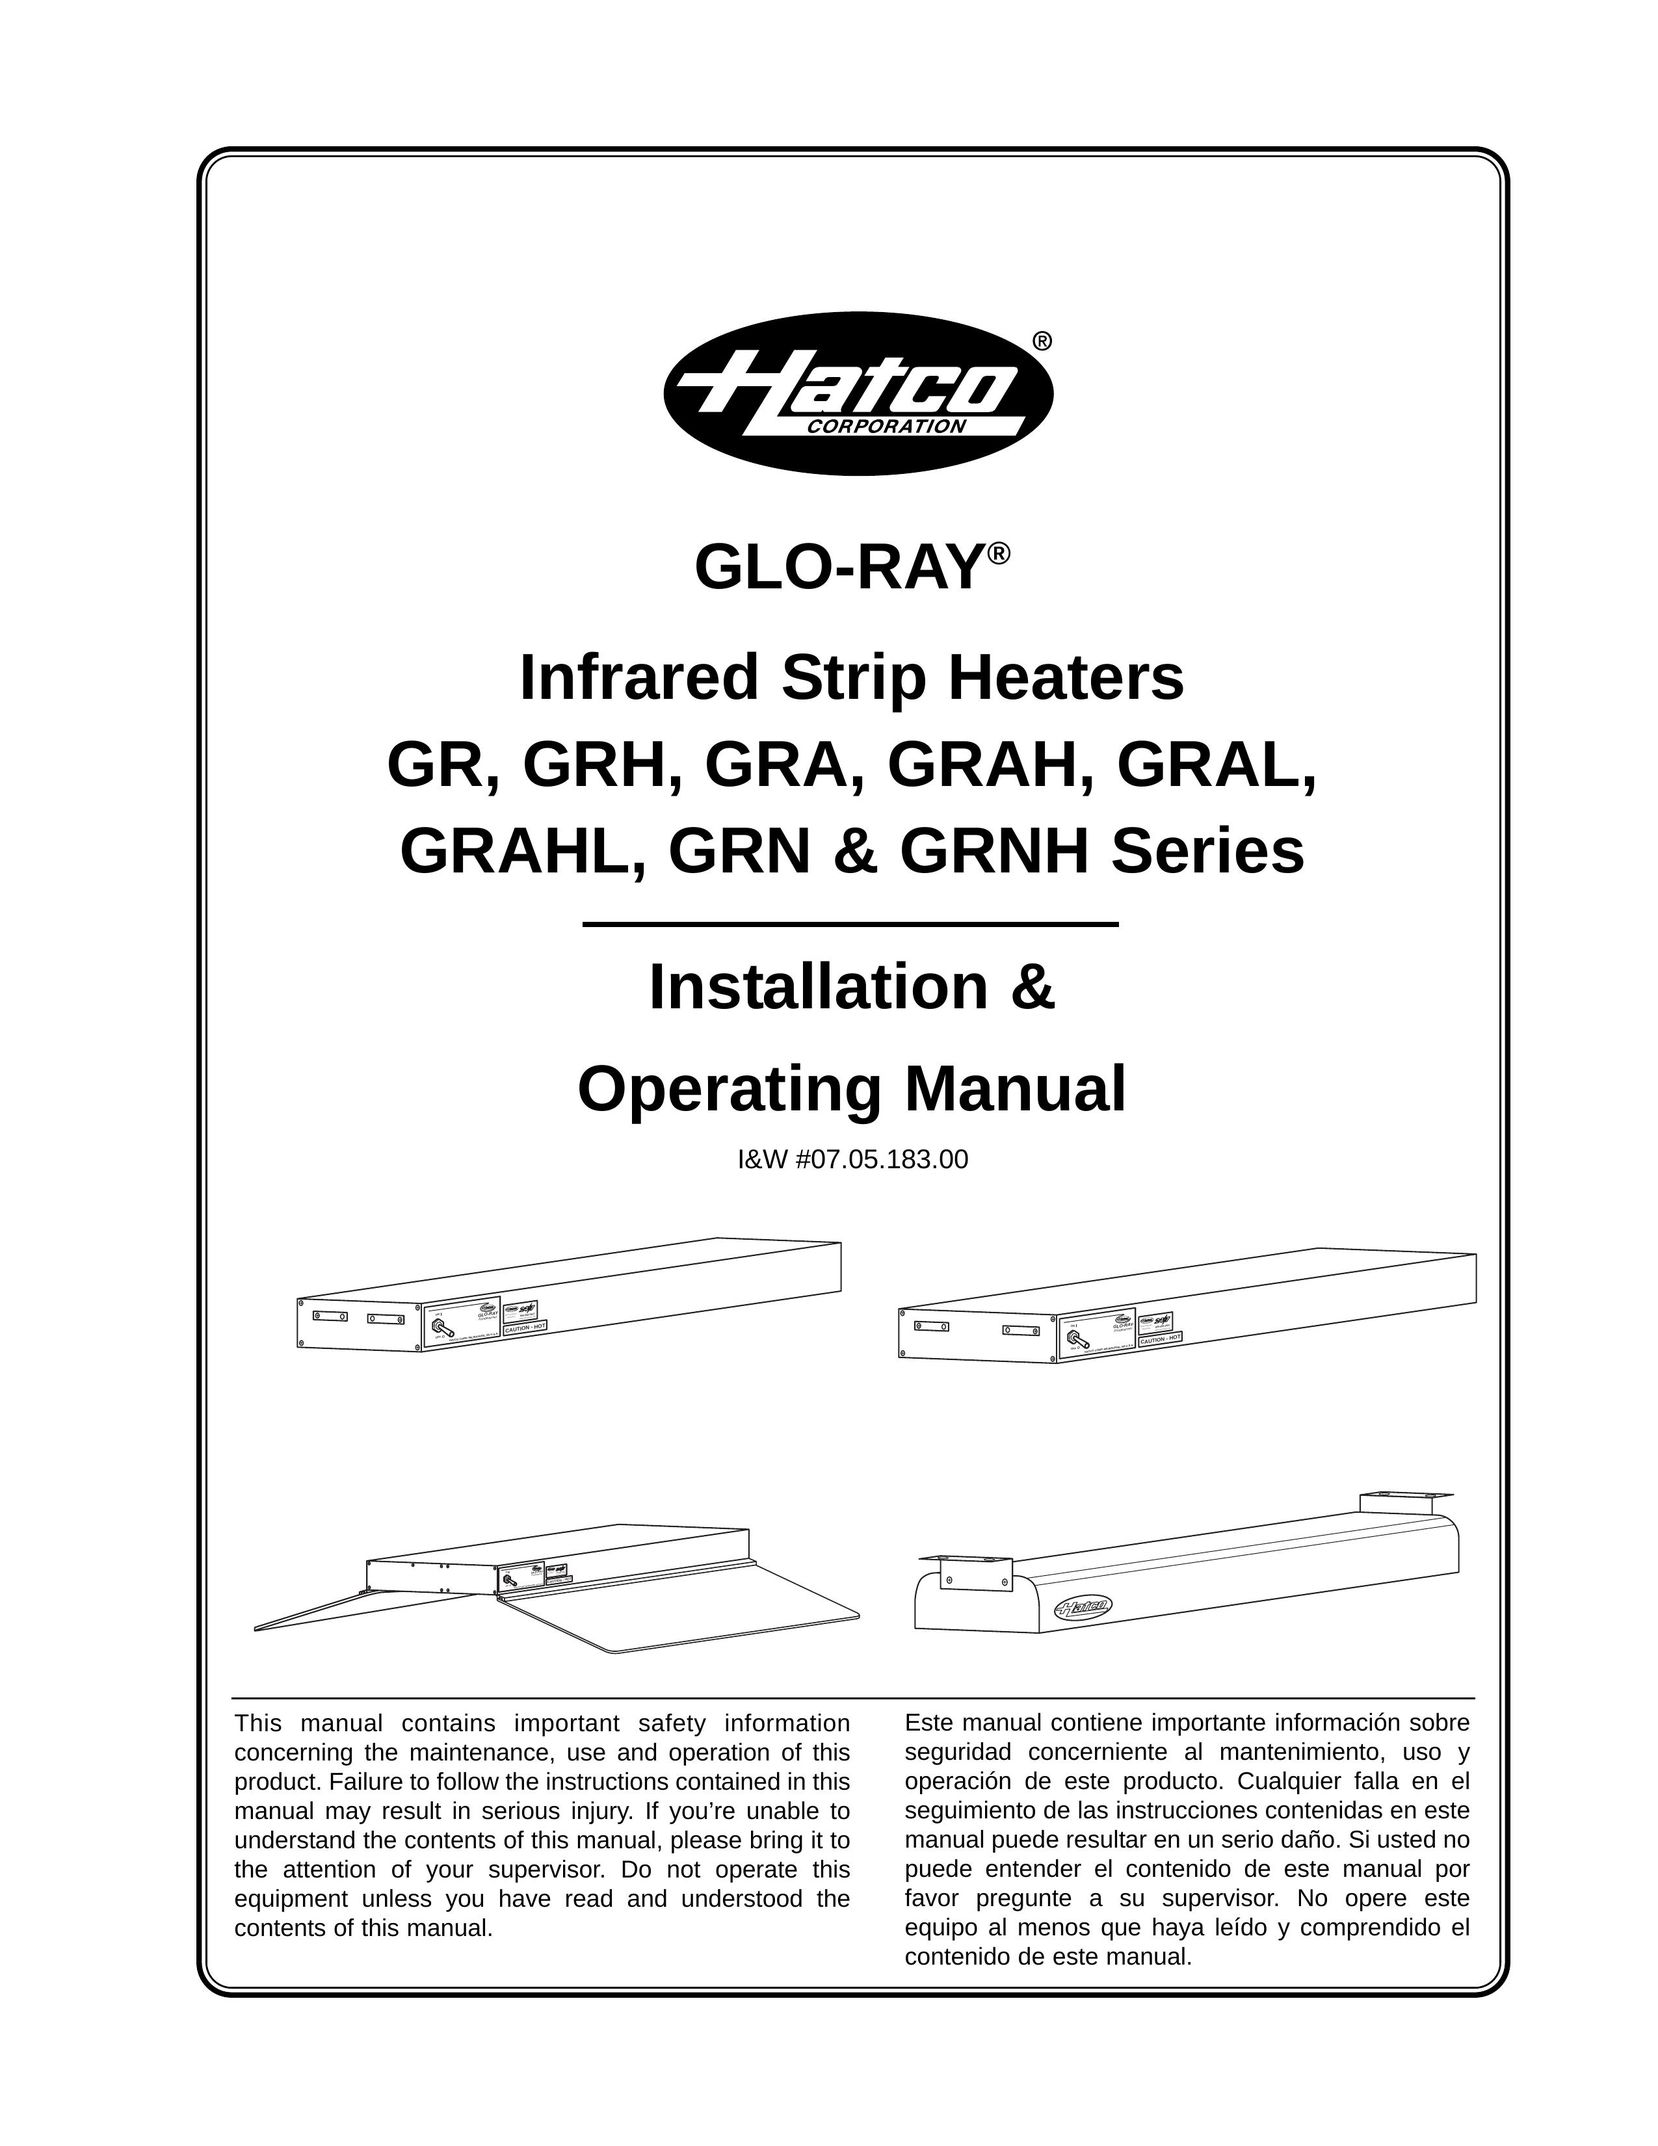 Hatco GRH Printer Accessories User Manual